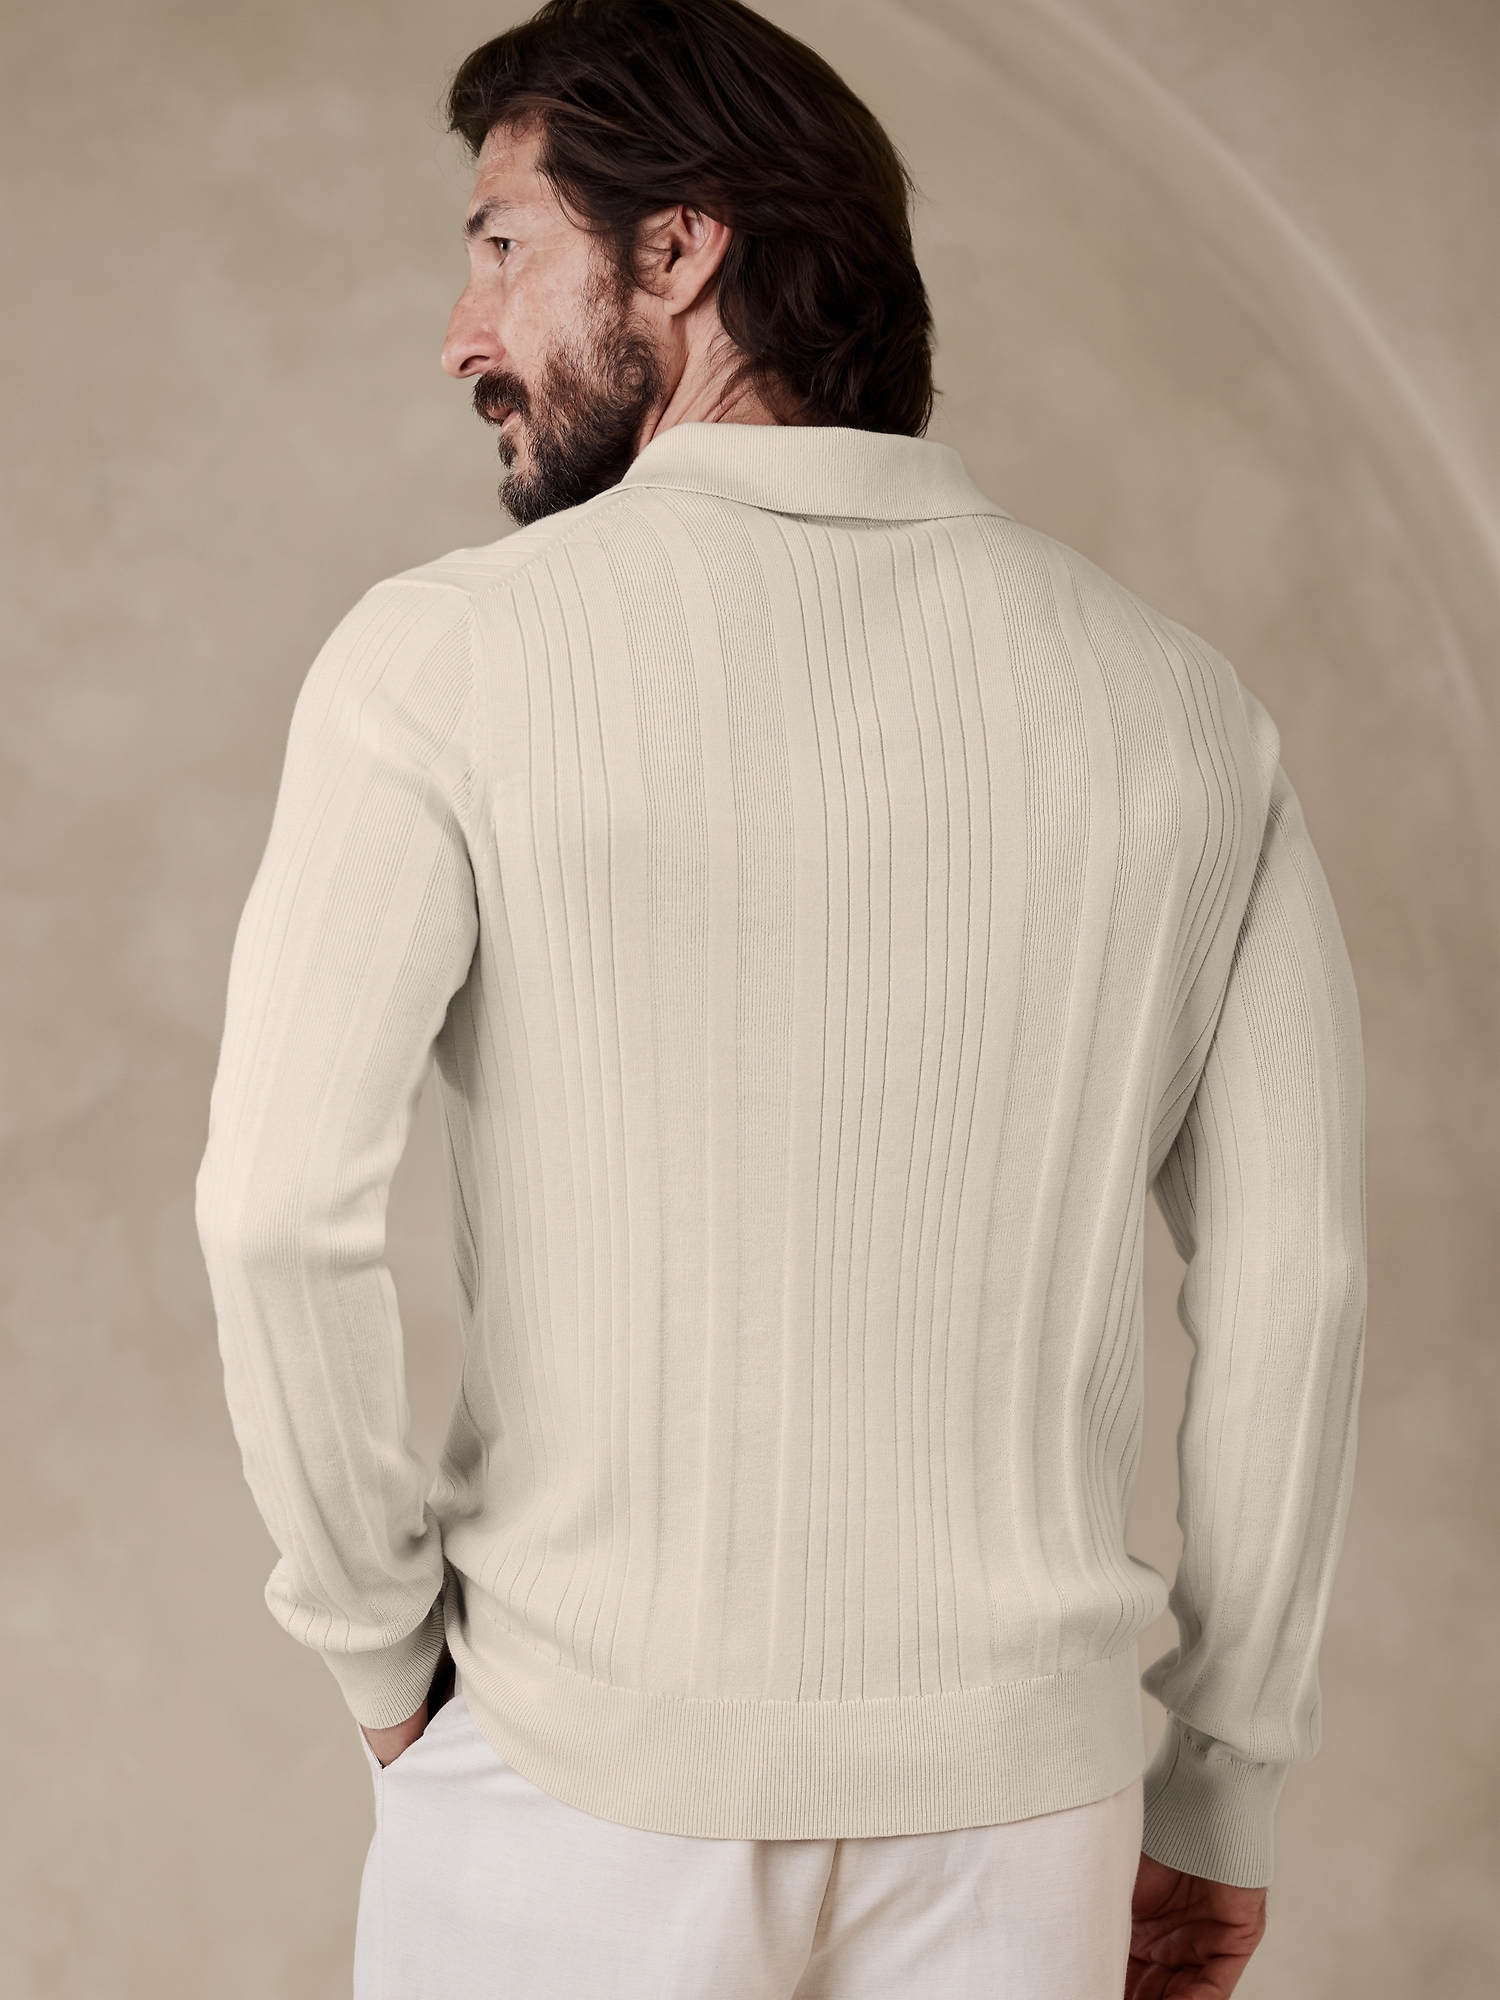 Dennis Cotton Sweater Polo